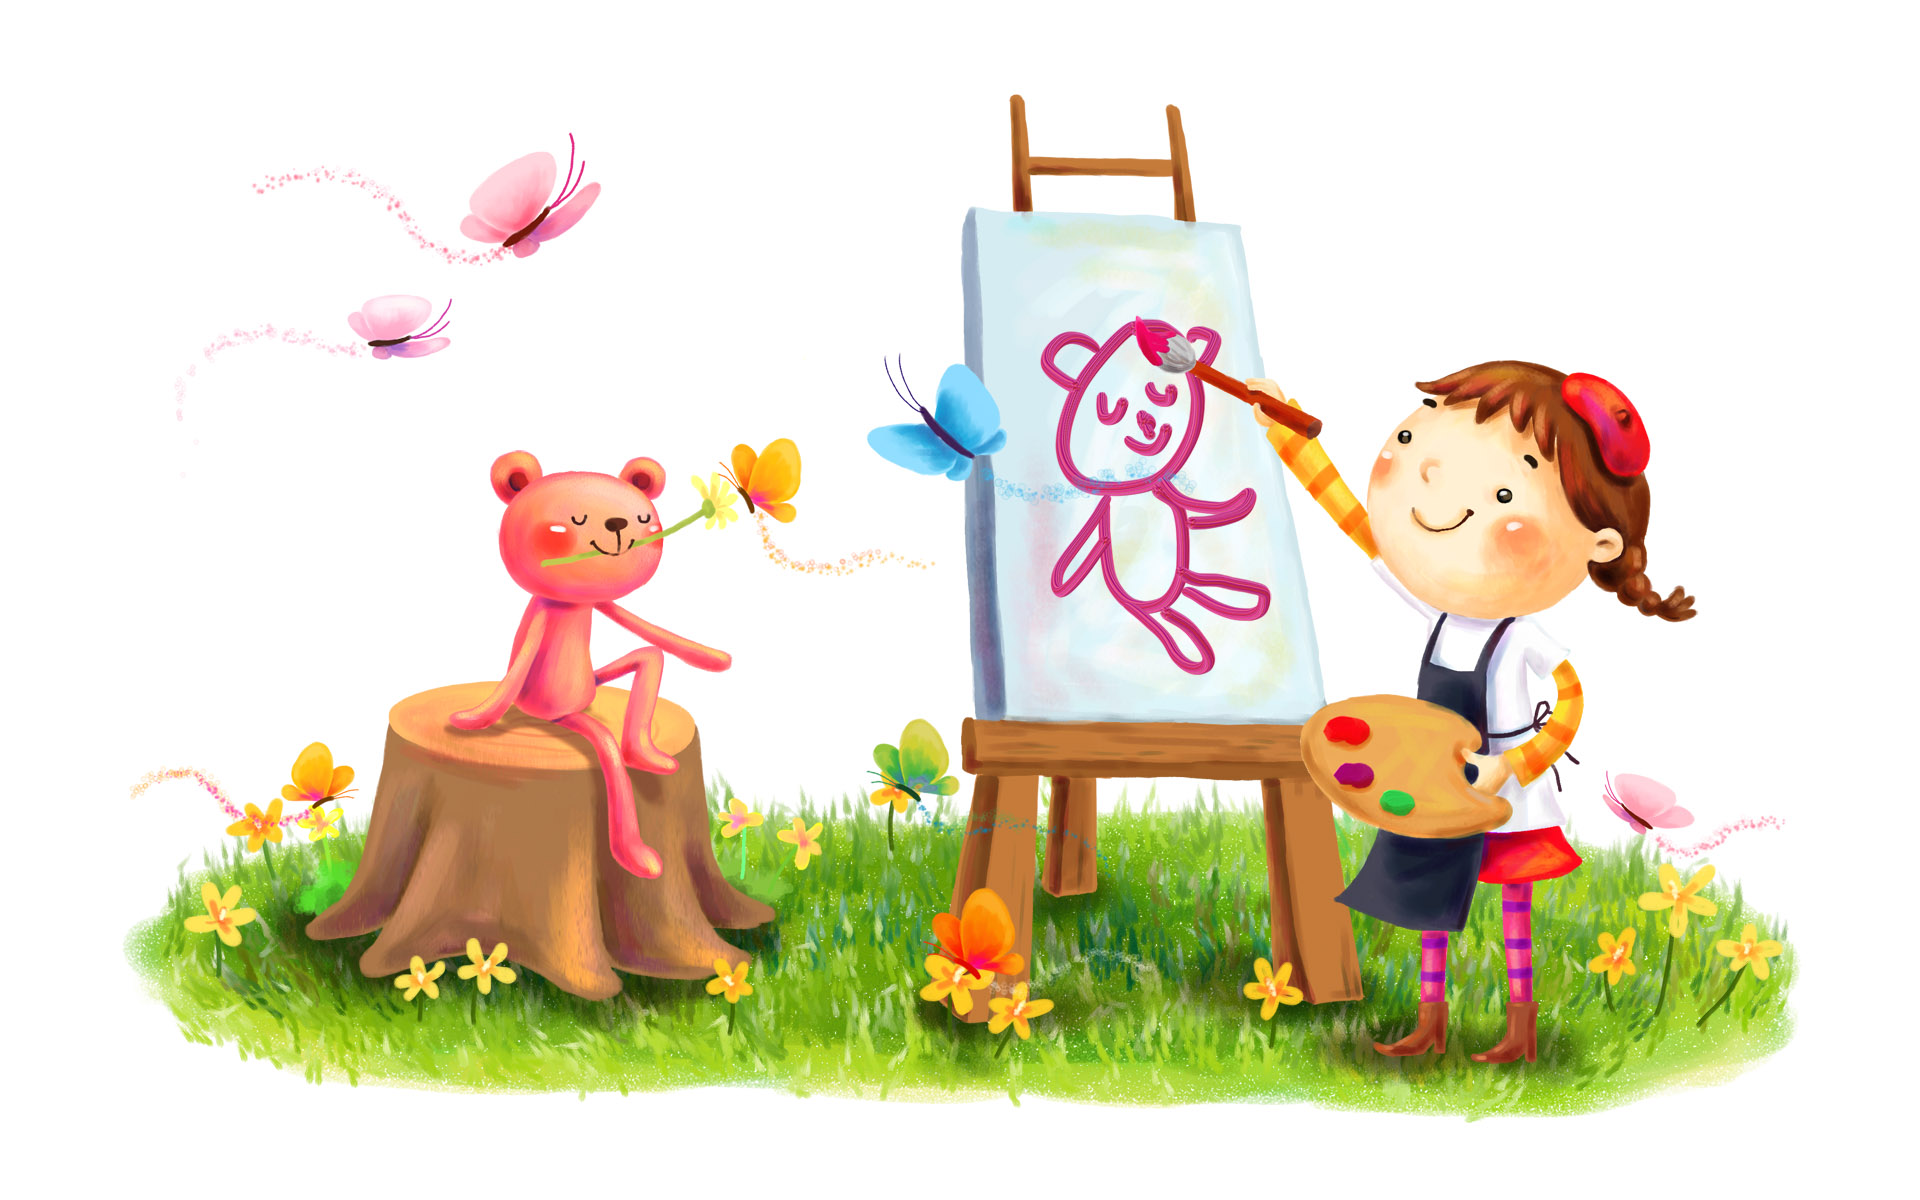 Artistic Childhood Dream HD Wallpaper | Background Image